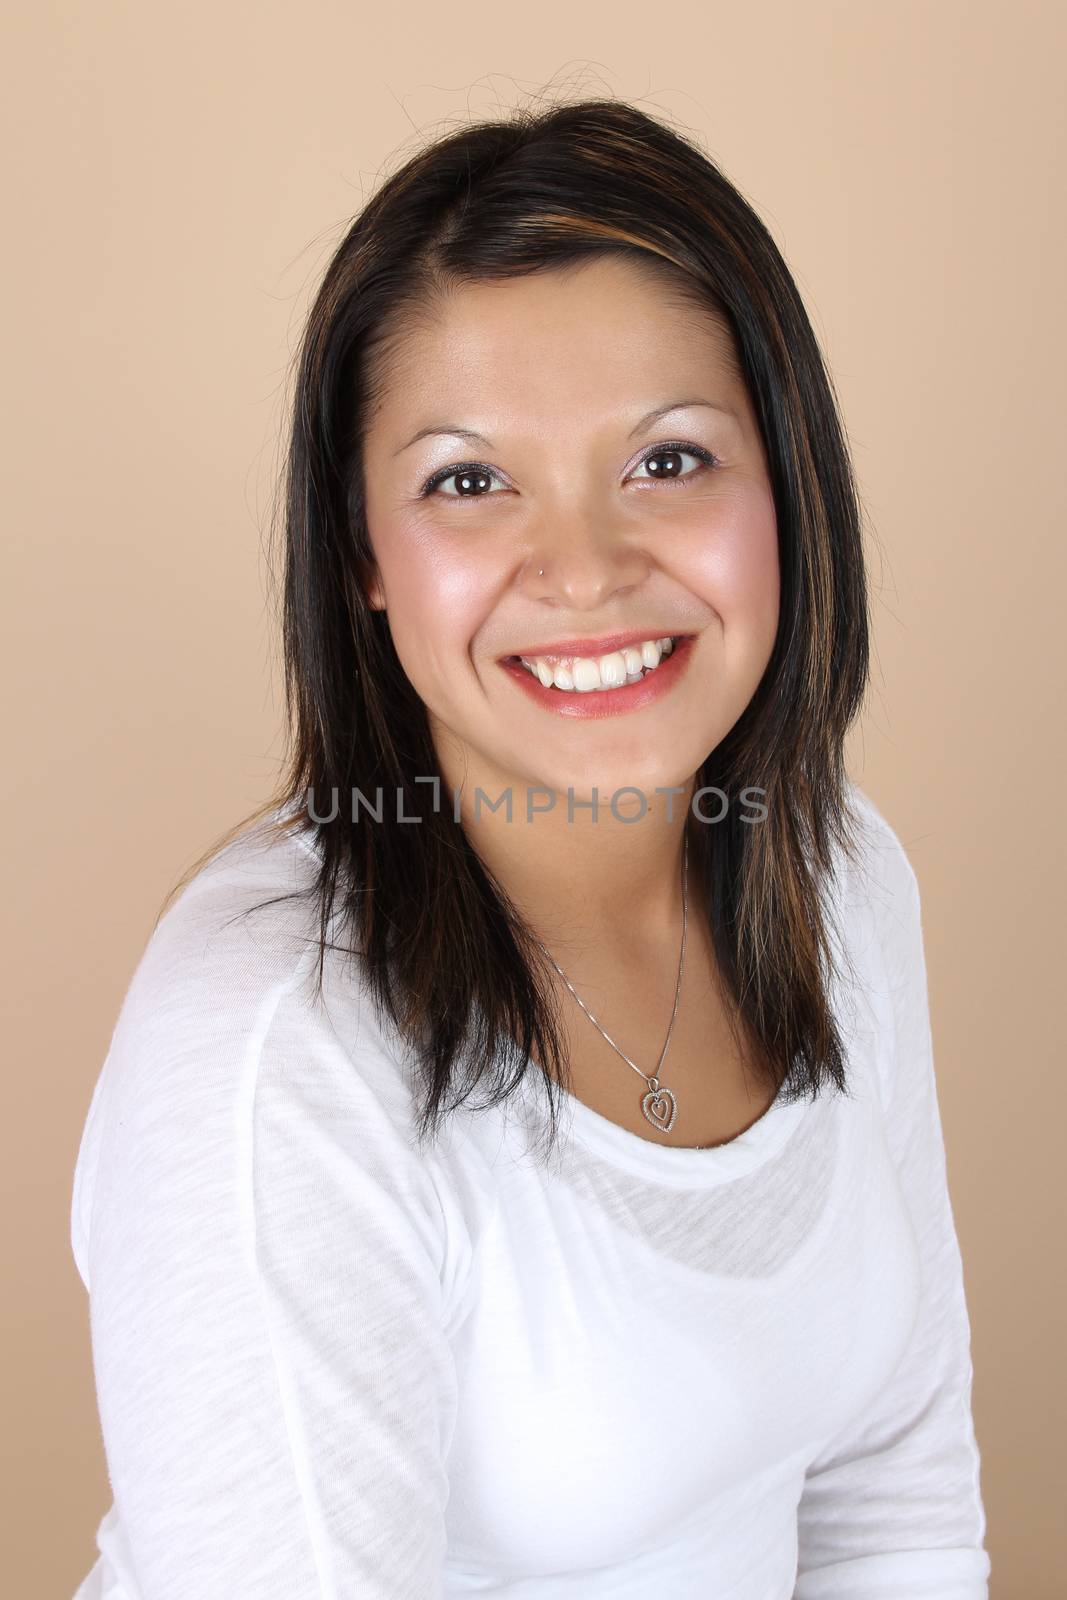 Beautiful Native American girl in studio portrait